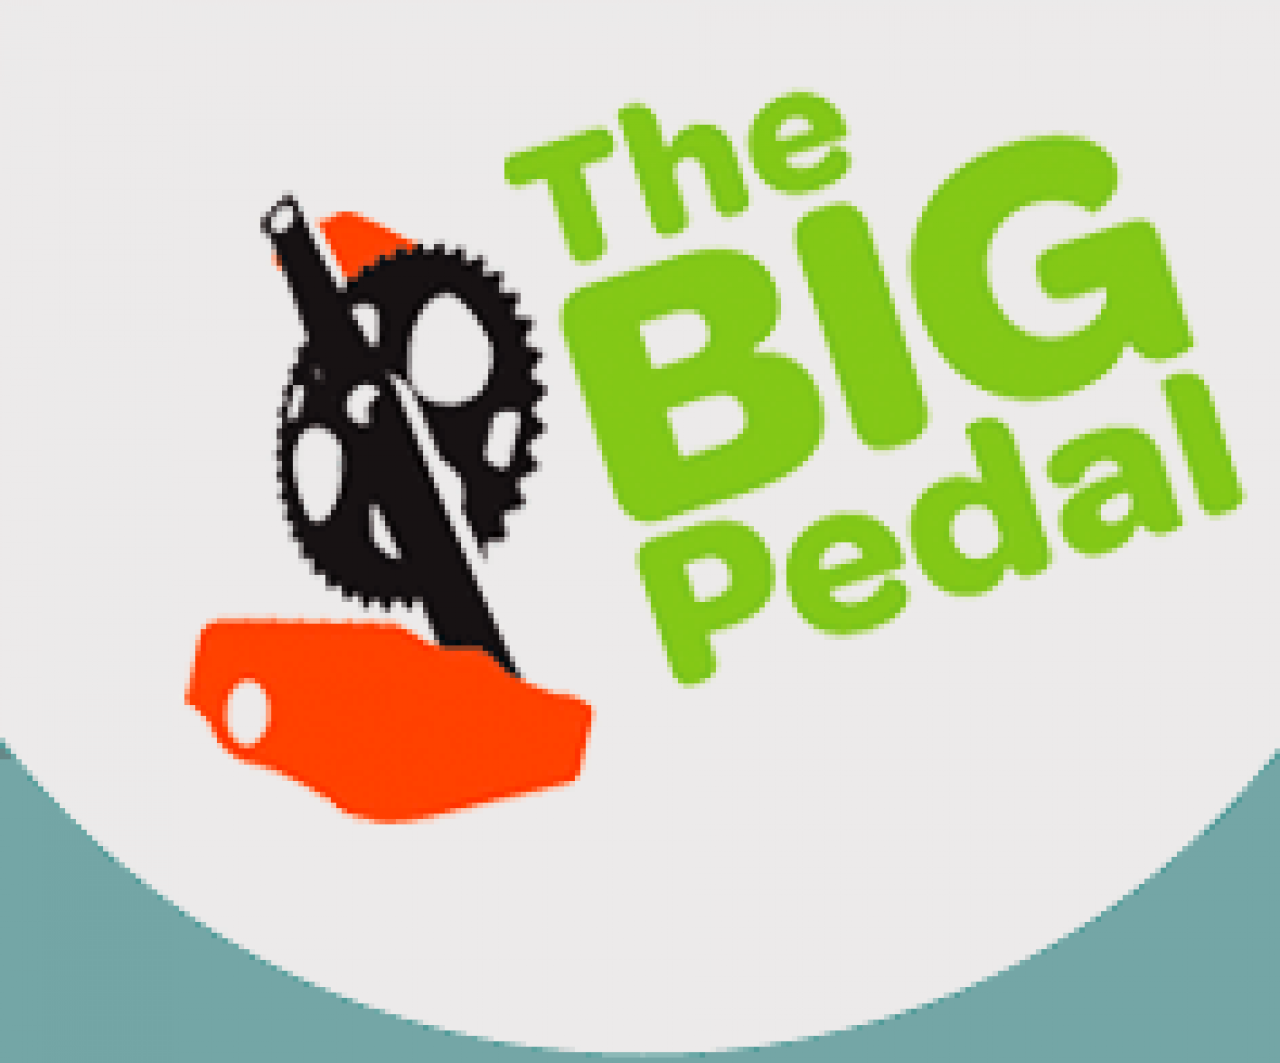 big pedal